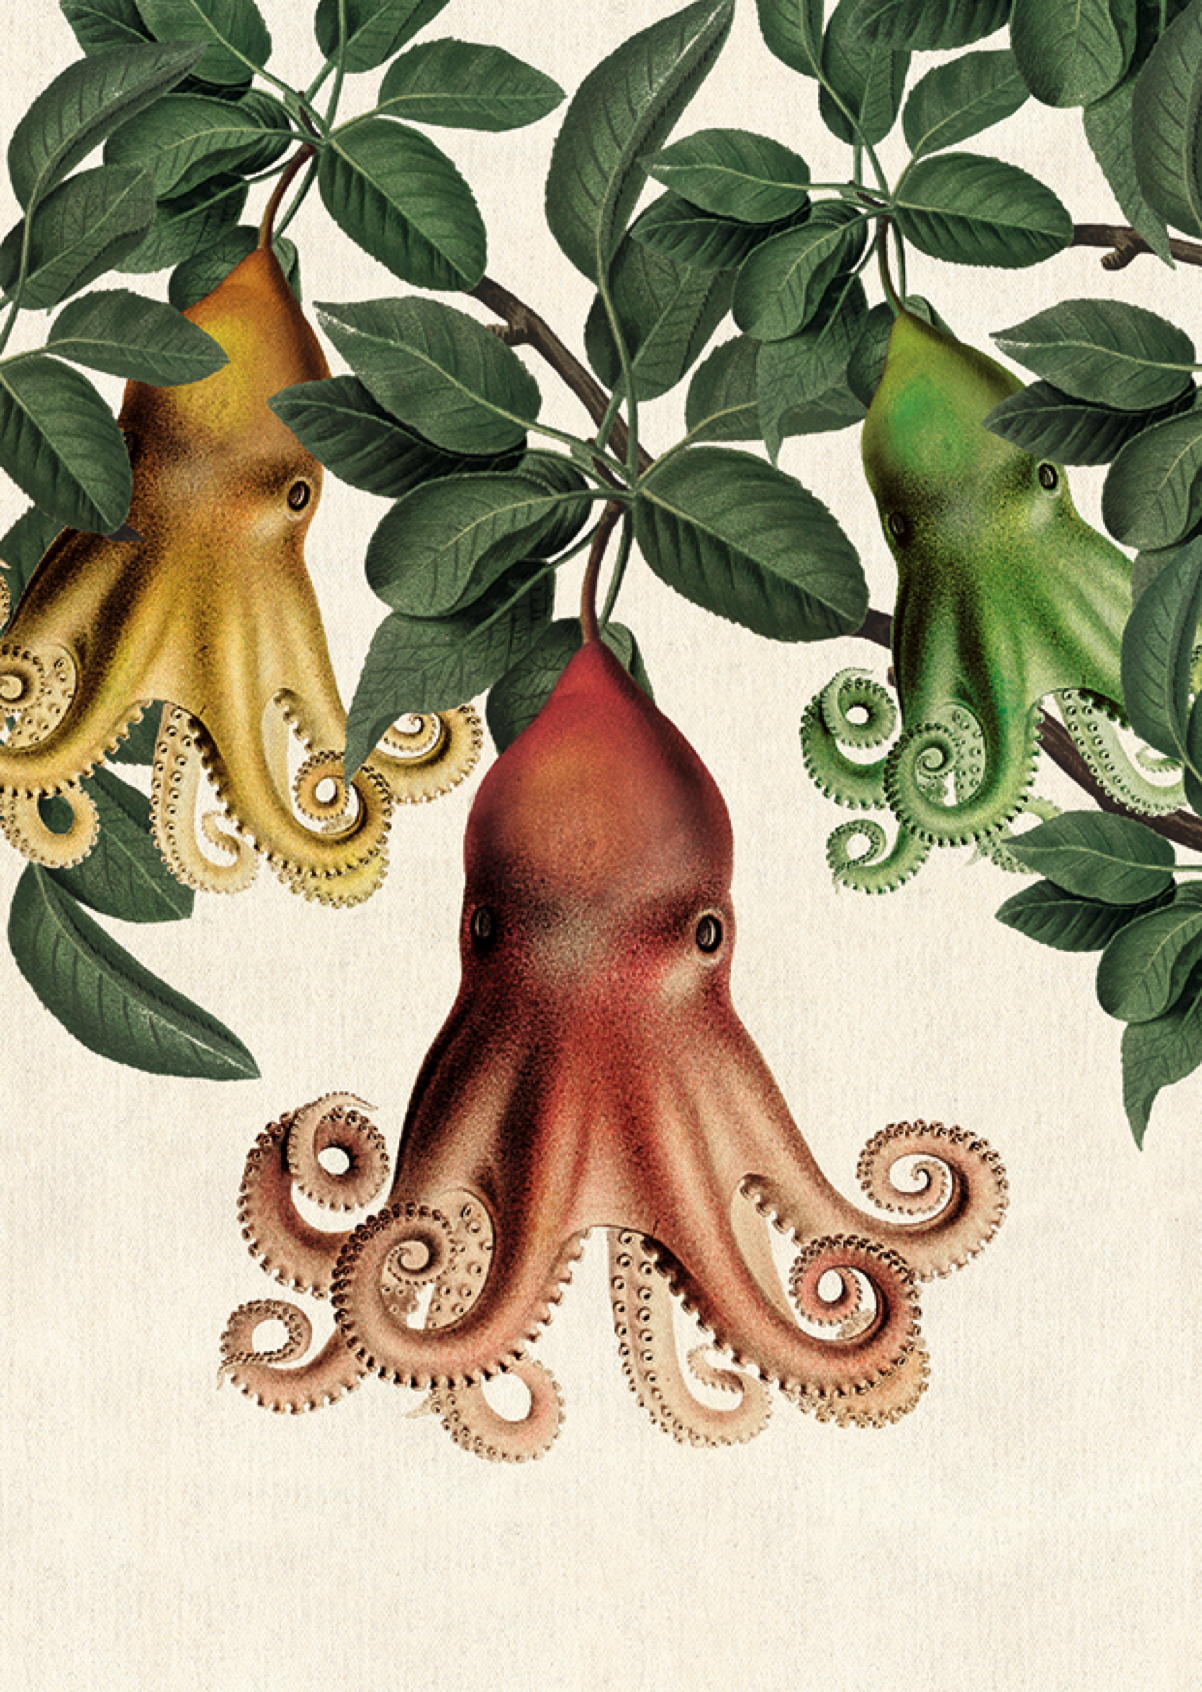 Octopus Harvest